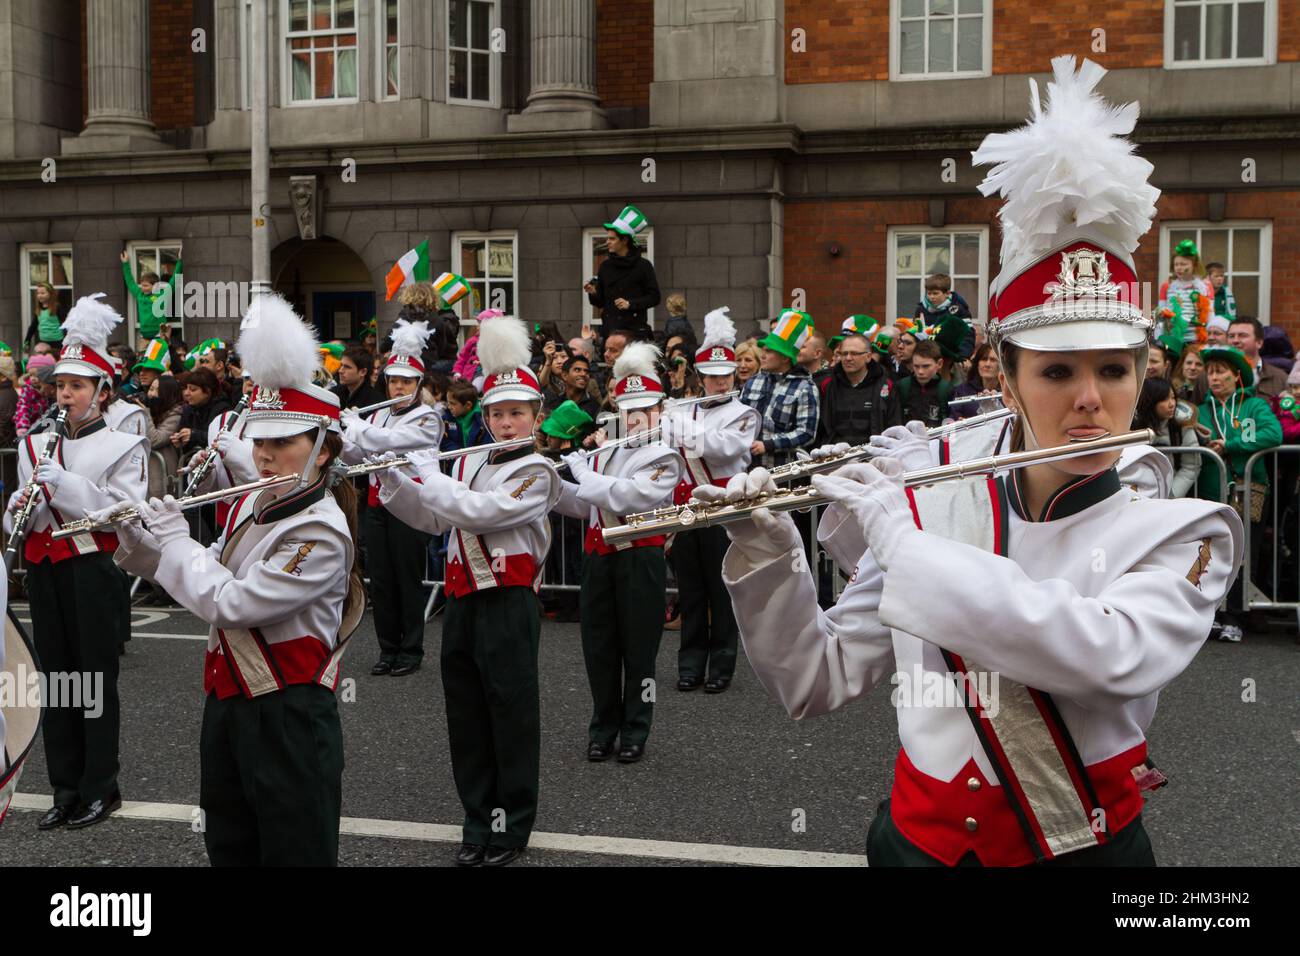 St Patrick's Day celebration in Dublin, Ireland Stock Photo